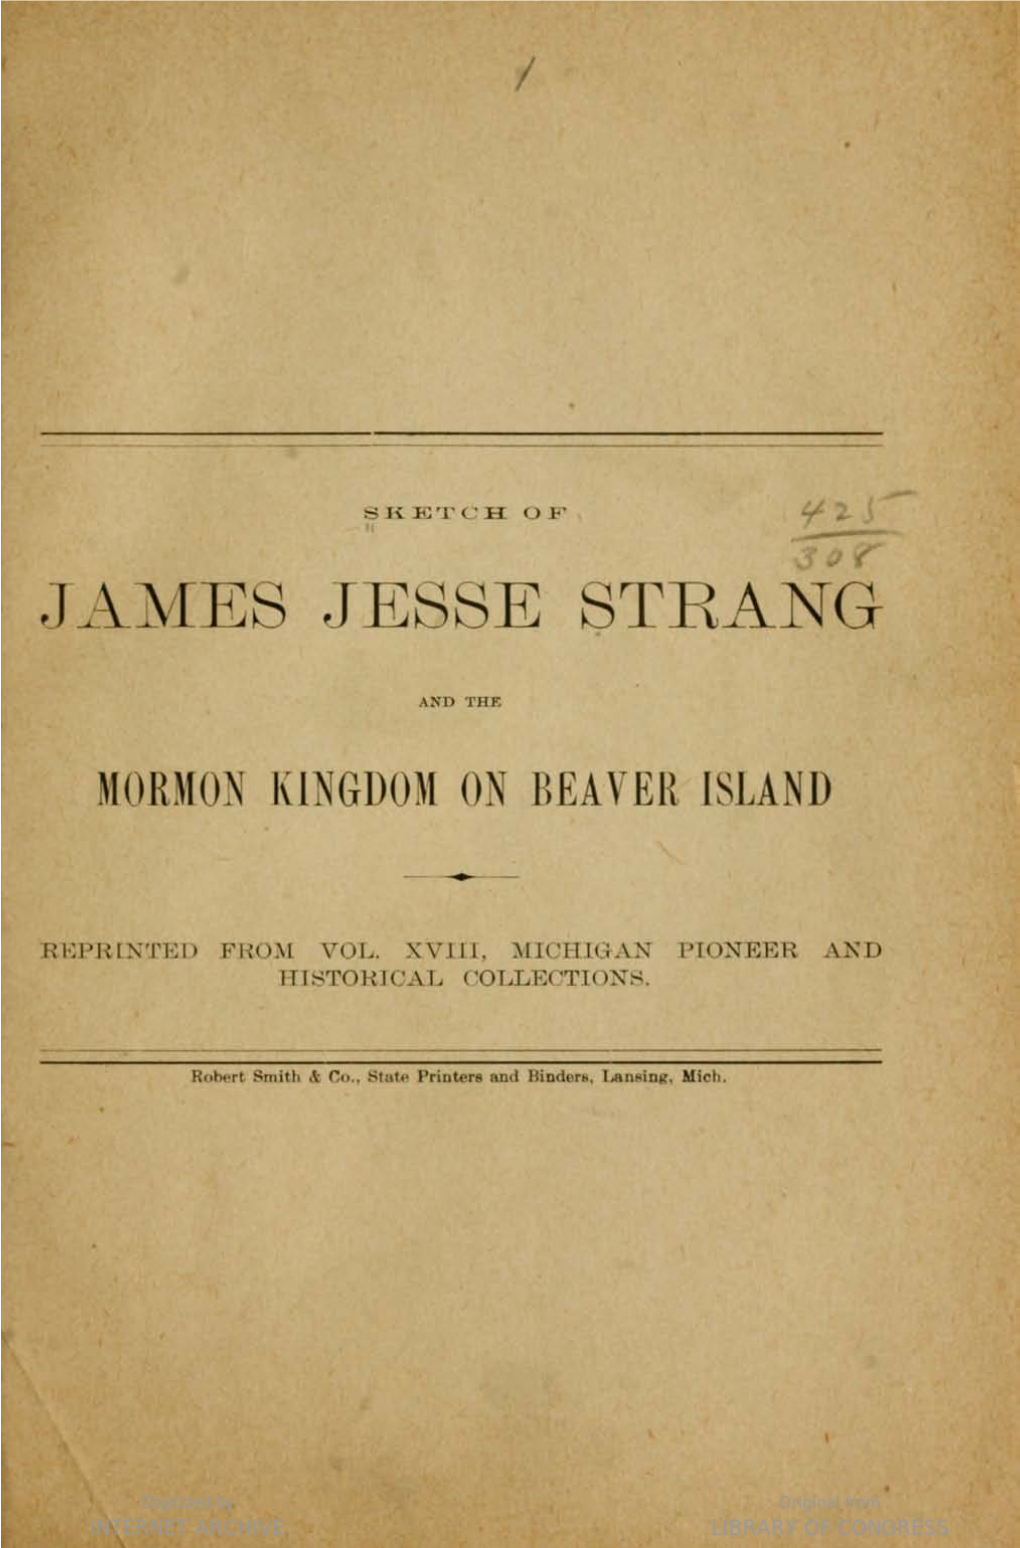 Sketch of James Jesse Strang and the Mormon Kingdom On